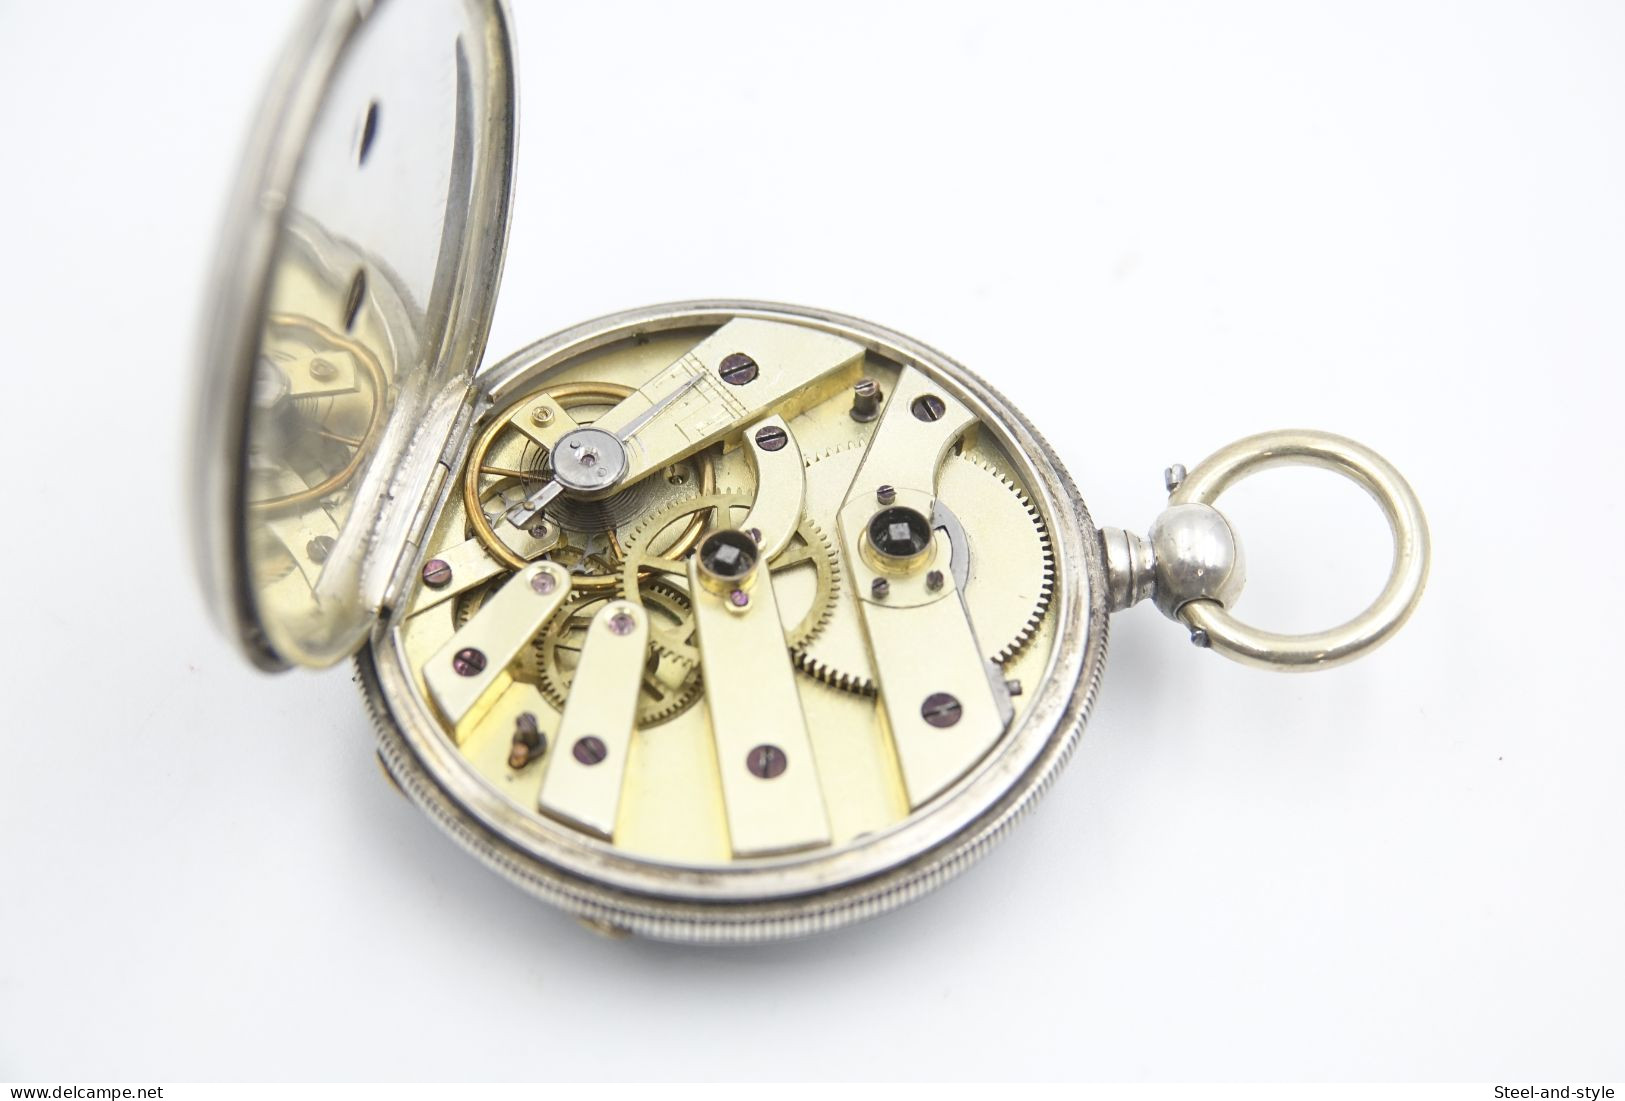 Watches : POCKET WATCH SOLID SILVER Key Winding Wide Dial Open Face 1880-900's - Original - Running - Taschenuhren